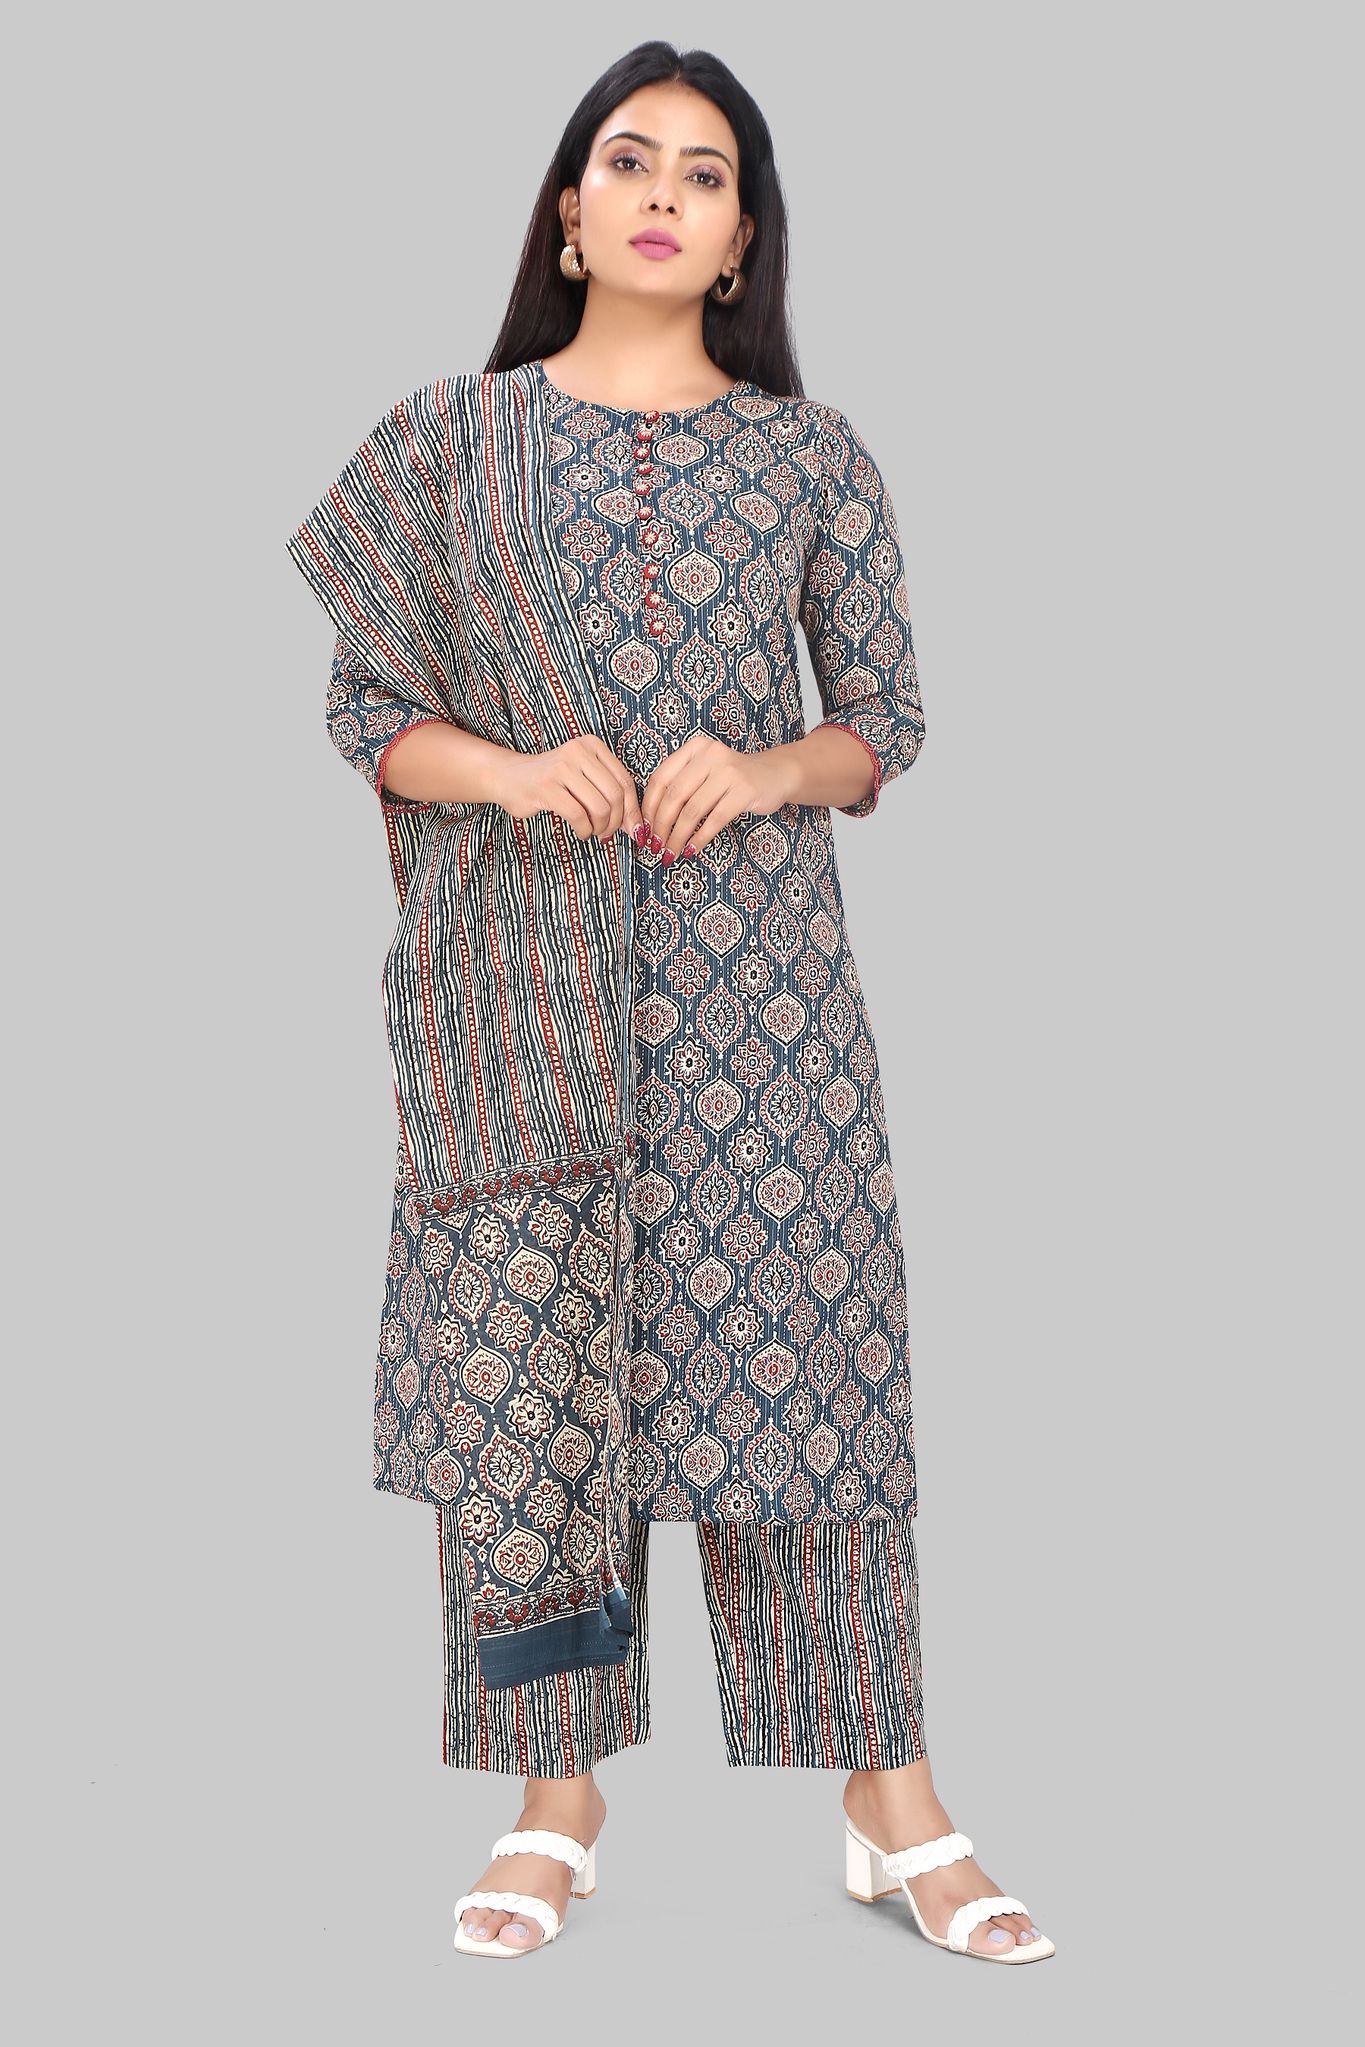 Bavishya Maroon & Navy Blue Jaipuri Cotton Suit Set